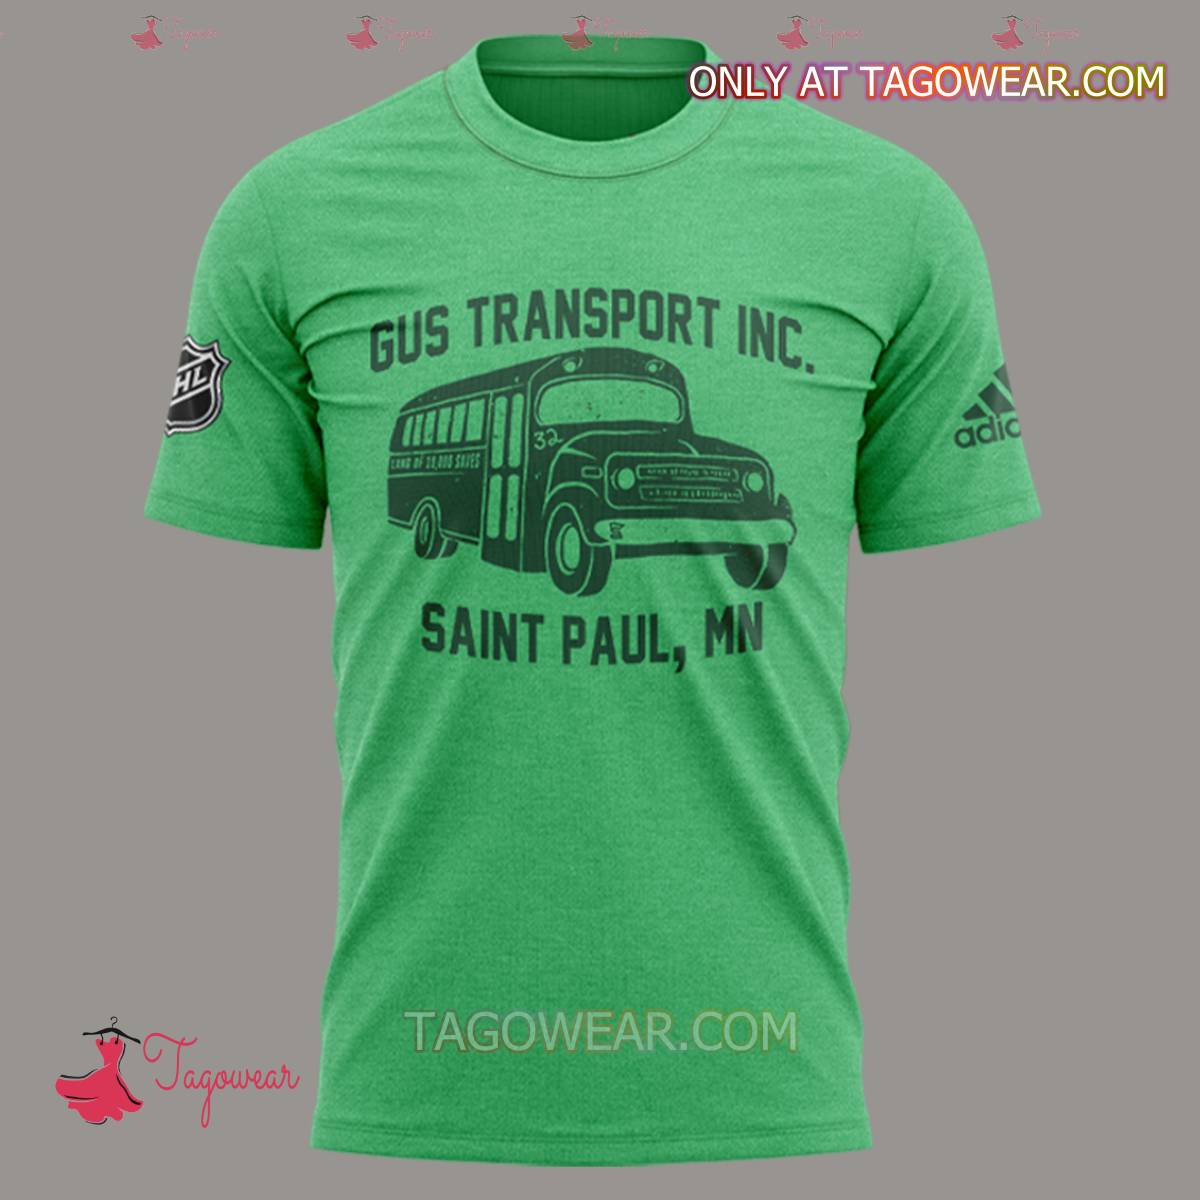 Minnesota Wild Gus Transport Inc. Saint Paul, Mn Shirt a